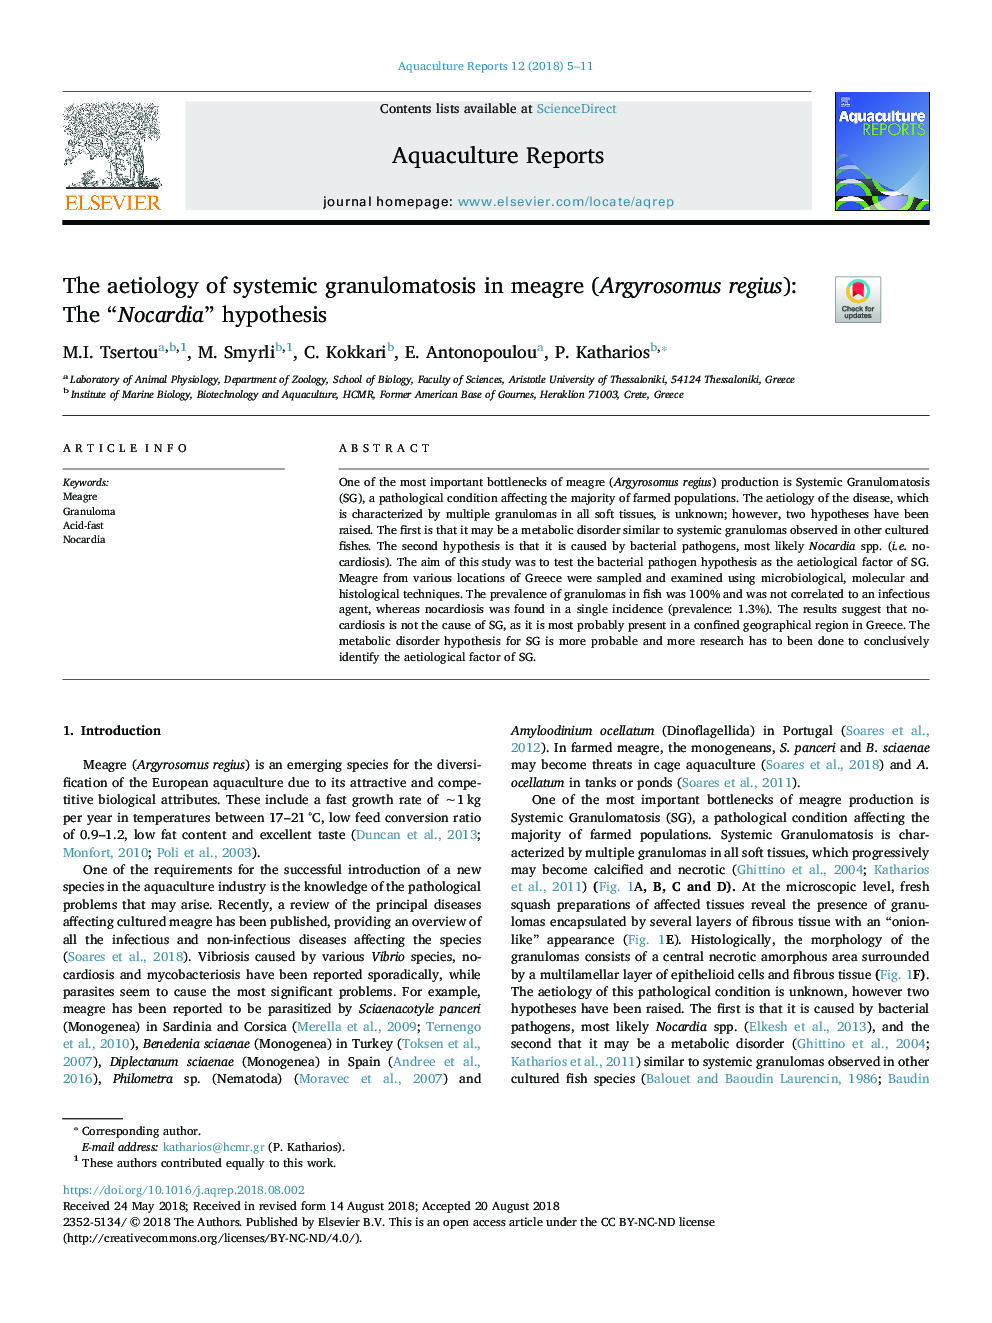 The aetiology of systemic granulomatosis in meagre (Argyrosomus regius): The “Nocardia” hypothesis